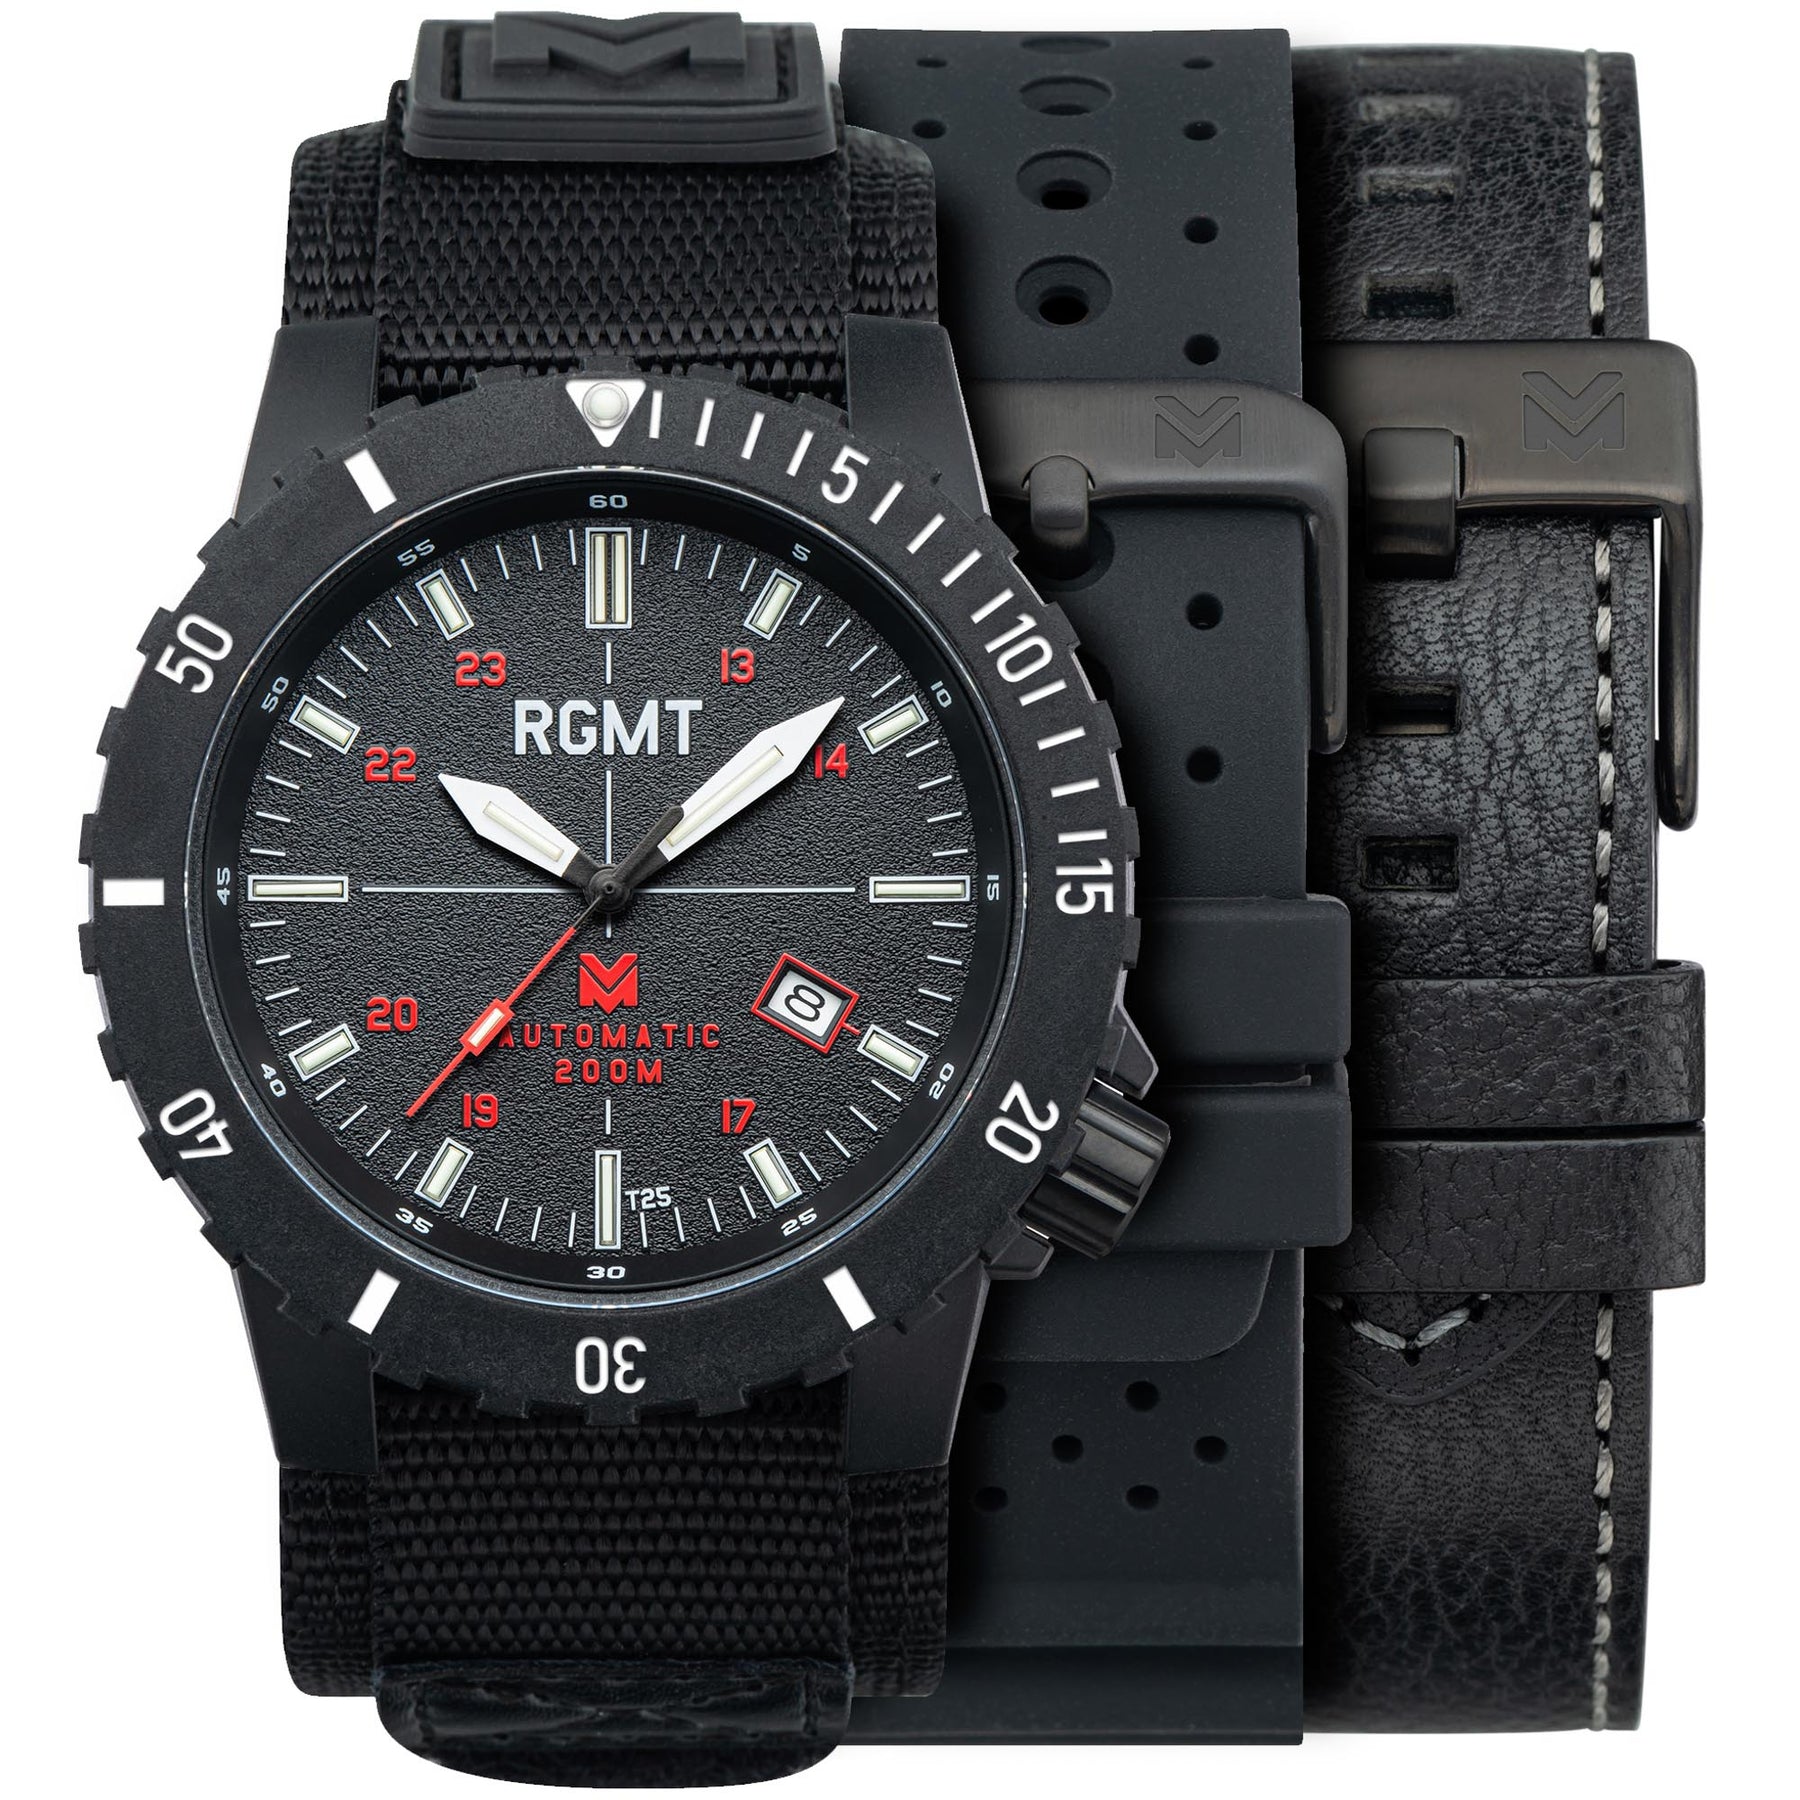 Alpha Strong Delta Smart Watch / Your Next Smart Watch?? - YouTube